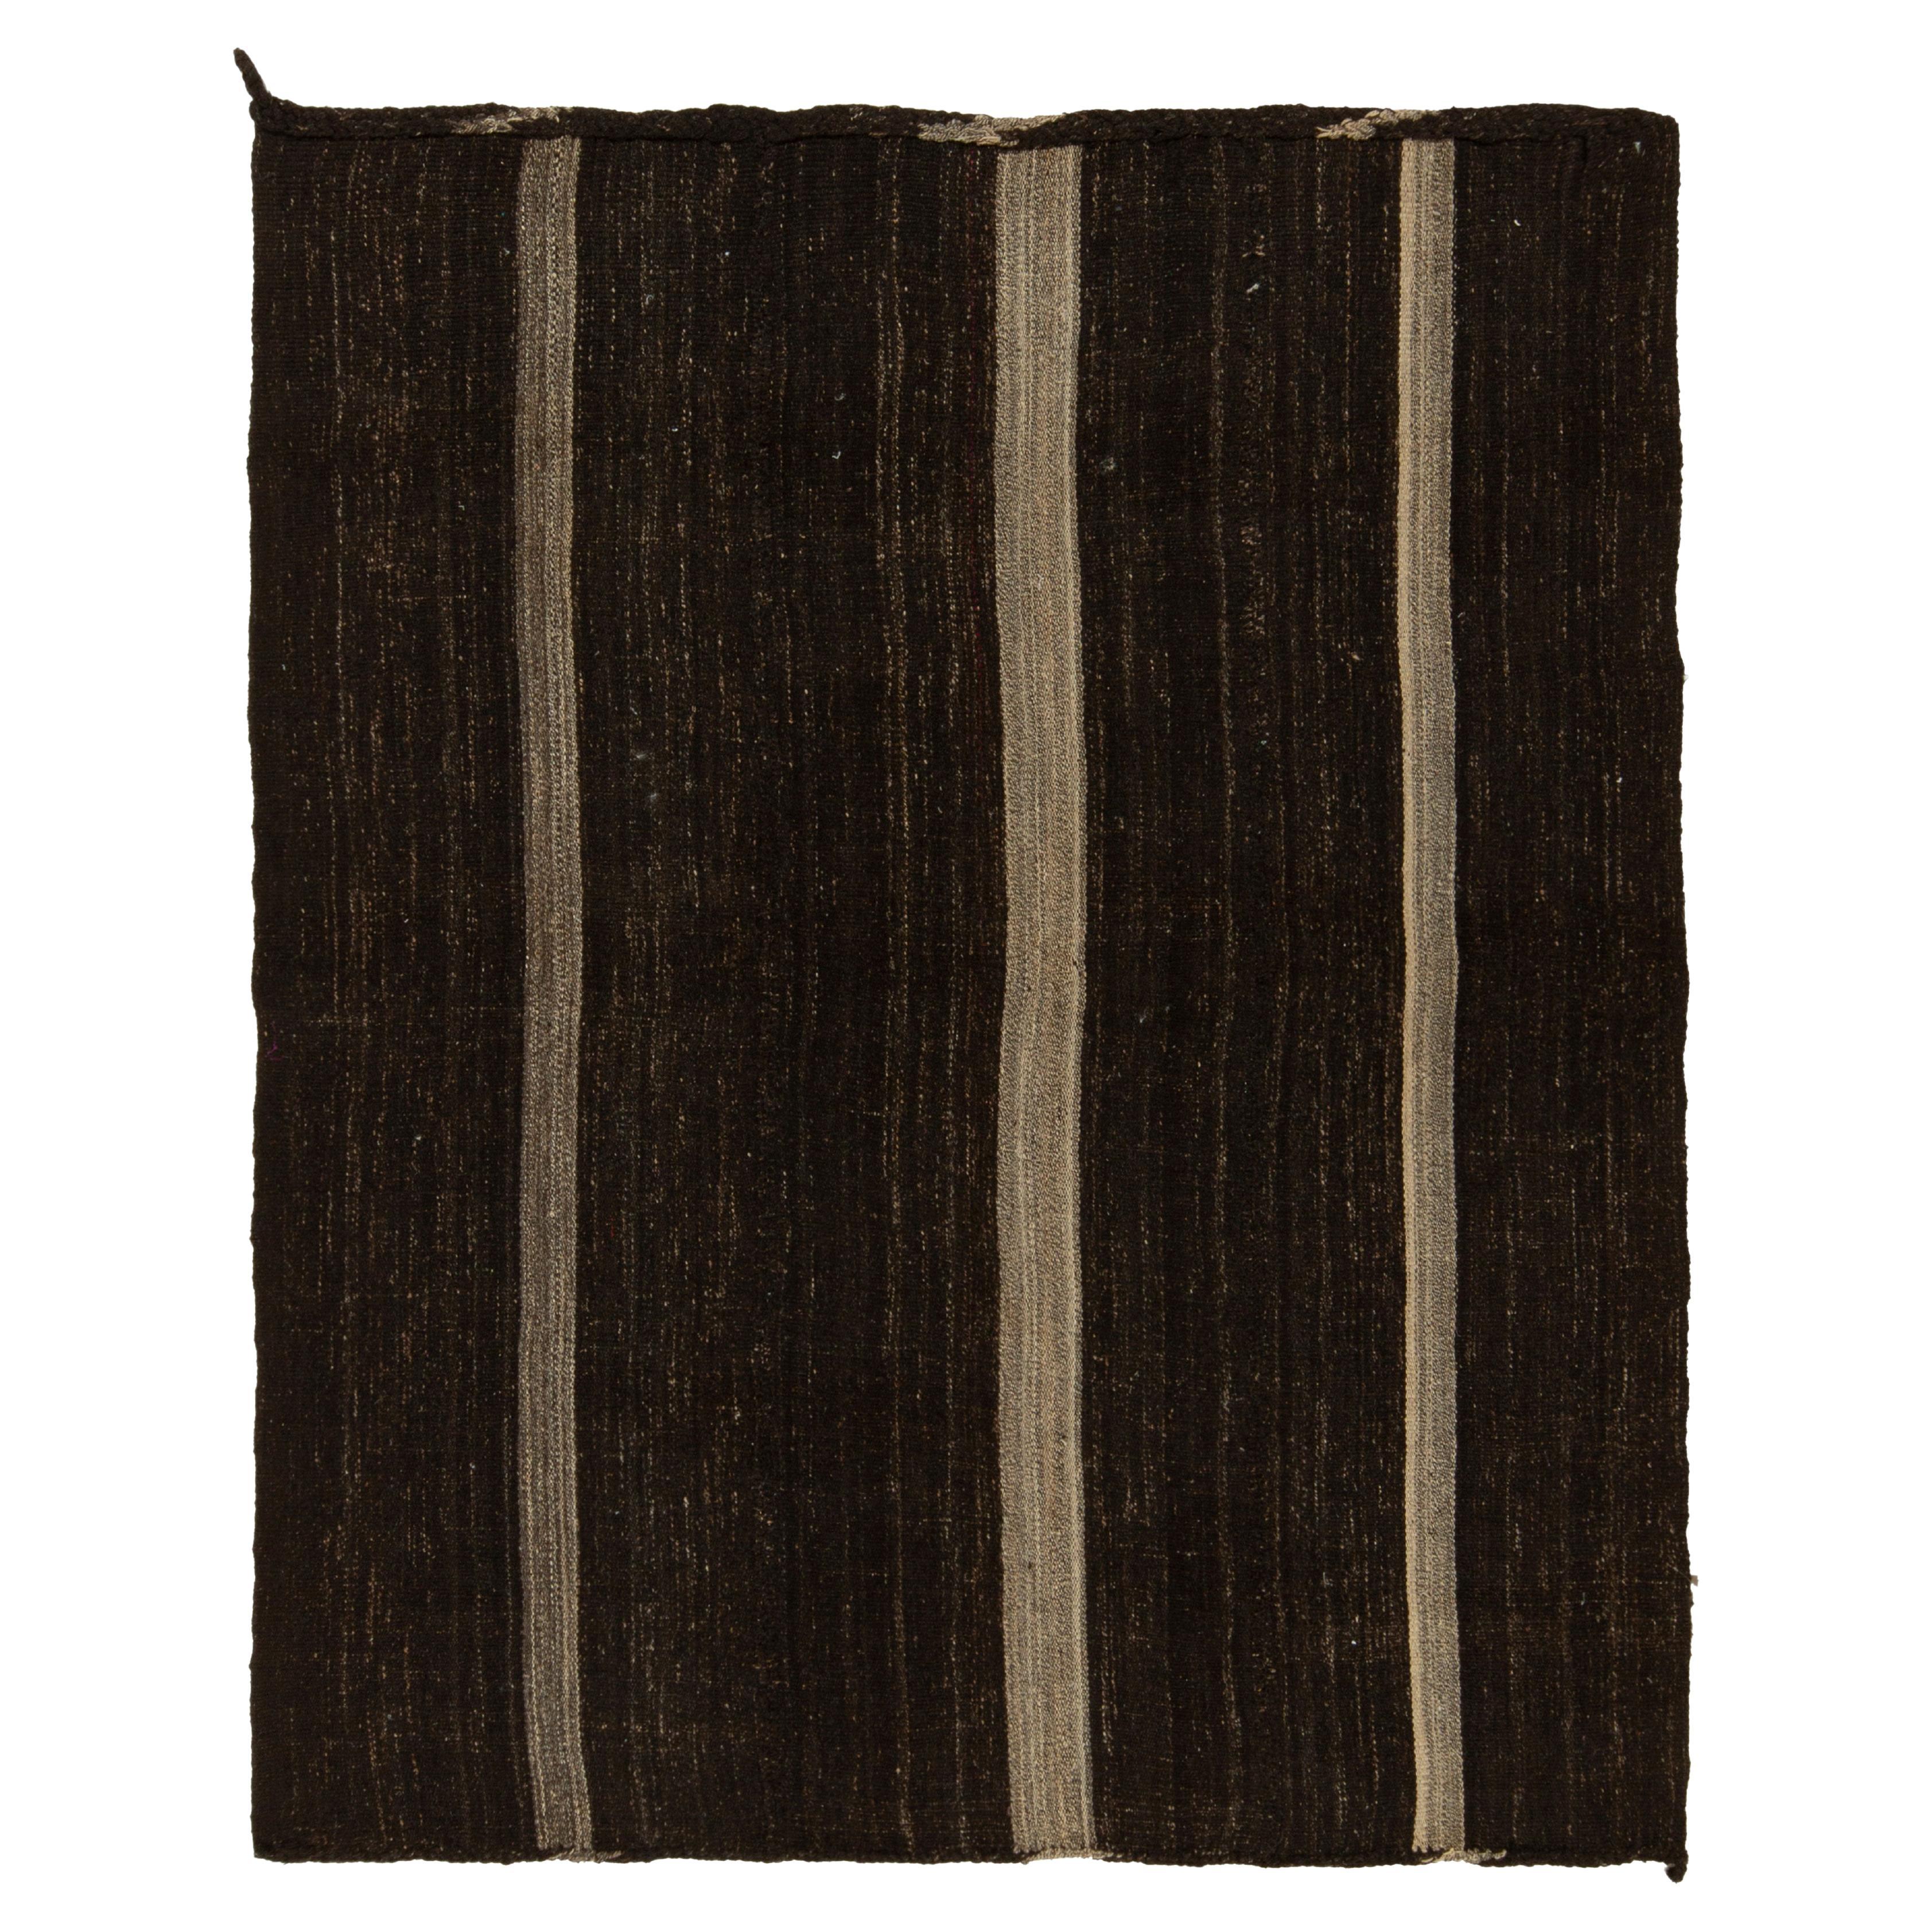 Vintage Kilim Rug in Beige-Brown Panel Style with Stripes by Rug & Kilim For Sale